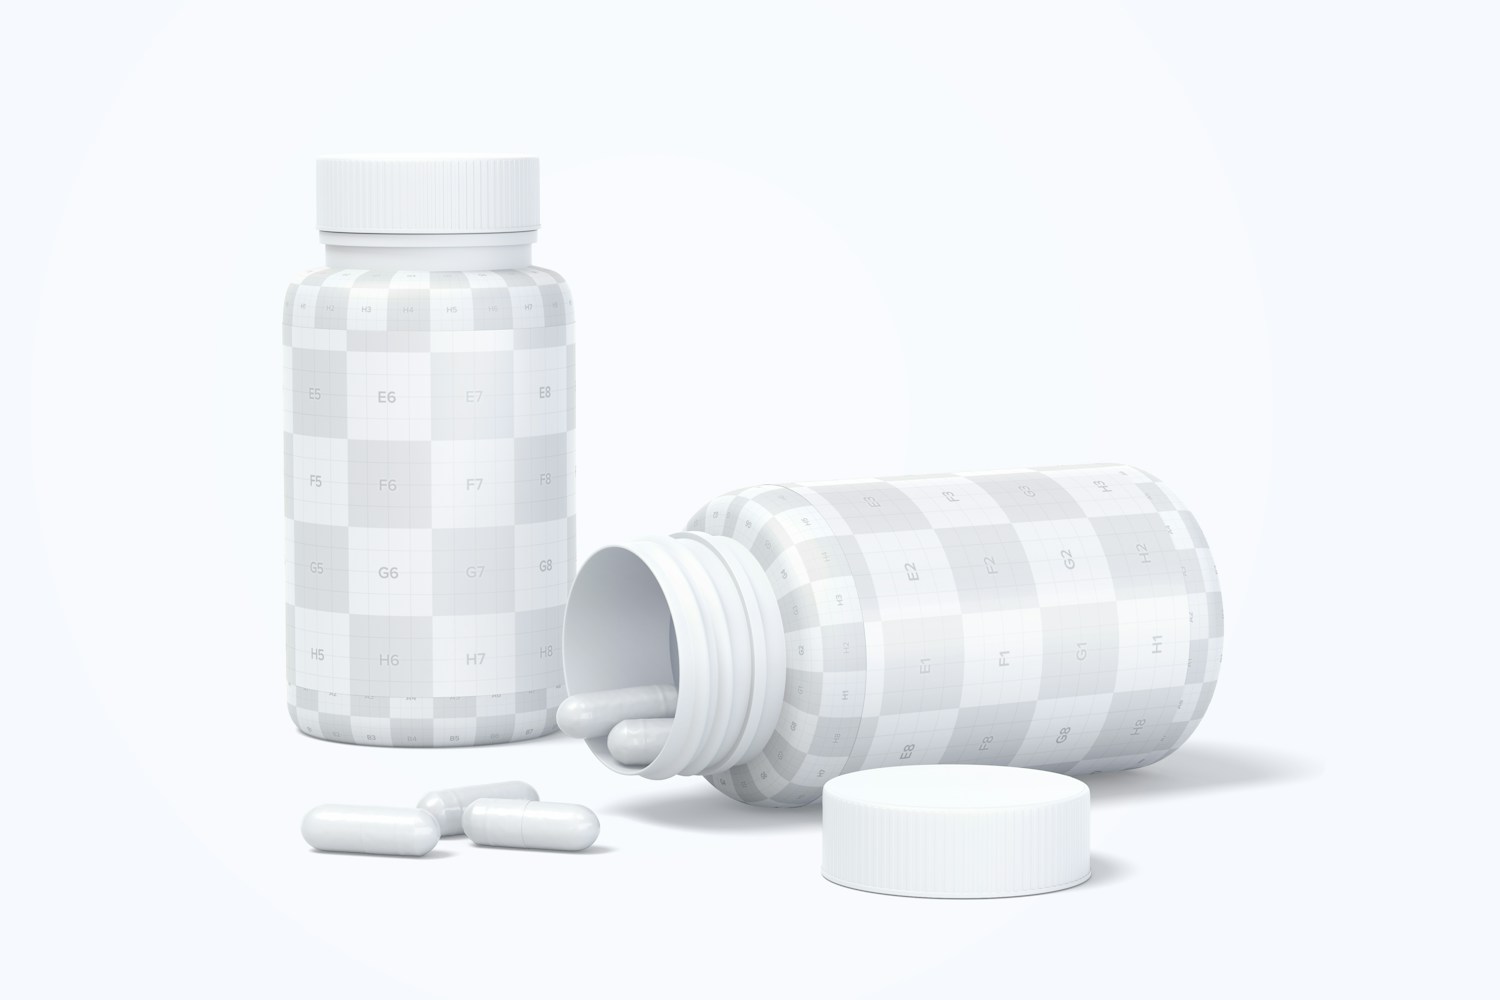 Plastic Pill Jars Mockup